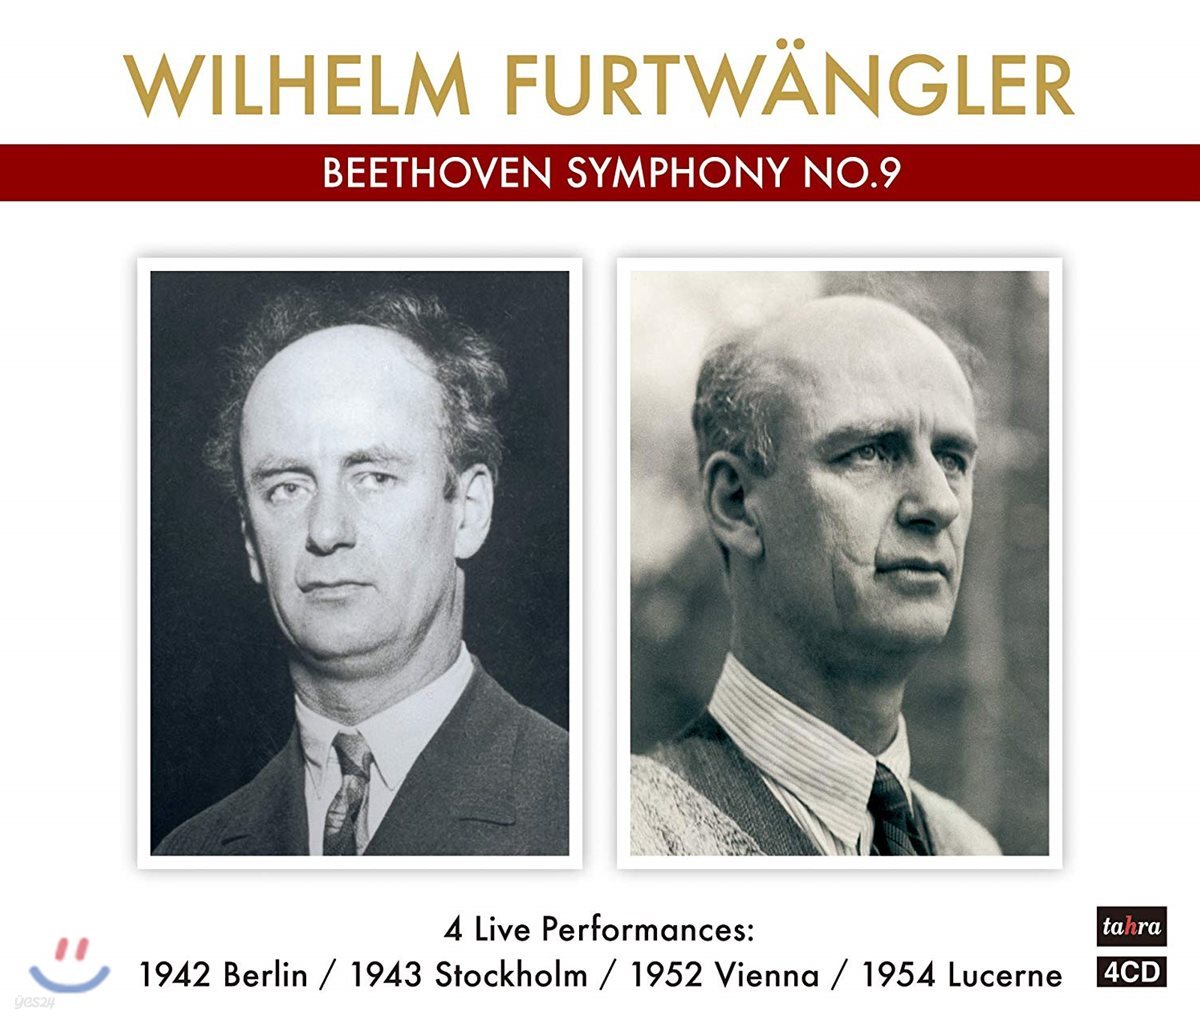 Wilhelm Furtwangler 베토벤: 교향곡 9번 (Beethoven: Symphony No. 9) [4CD]